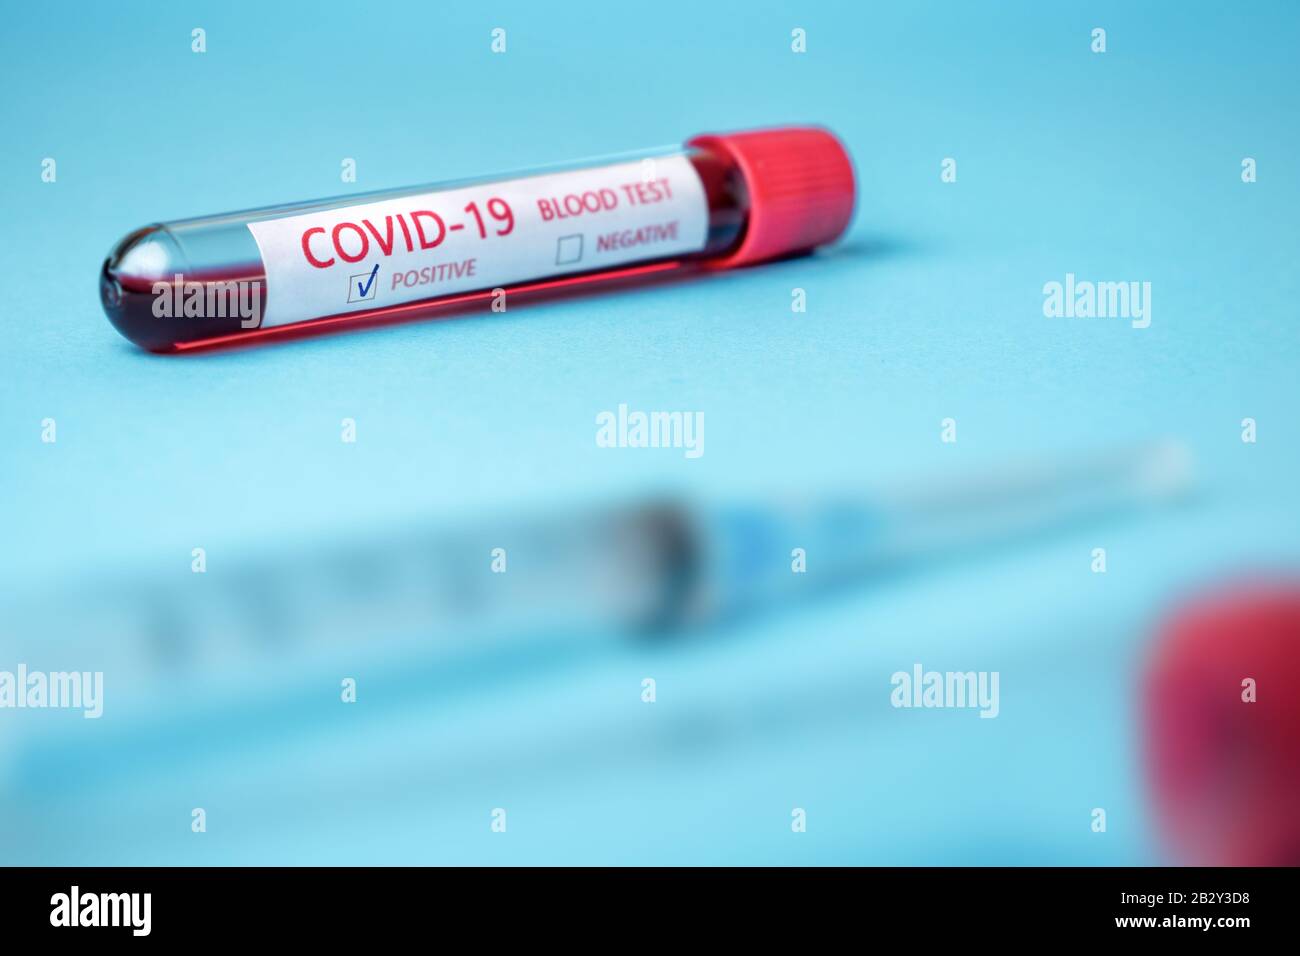 Test tube with blood sample for COVID-19 test, novel coronavirus 2019 found in Wuhan, China. Coronavirus disease: COVID-19. Blue background Stock Photo